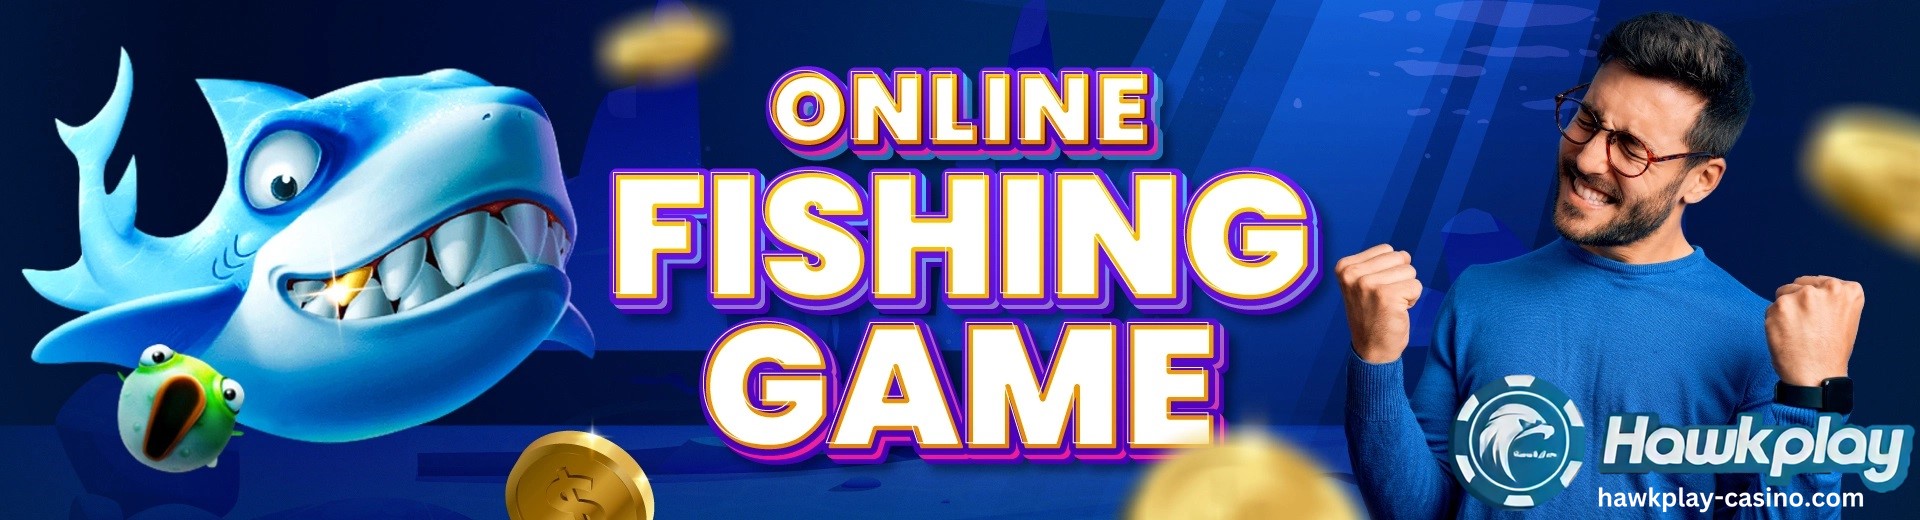 Online Fishing Game Hawkplay